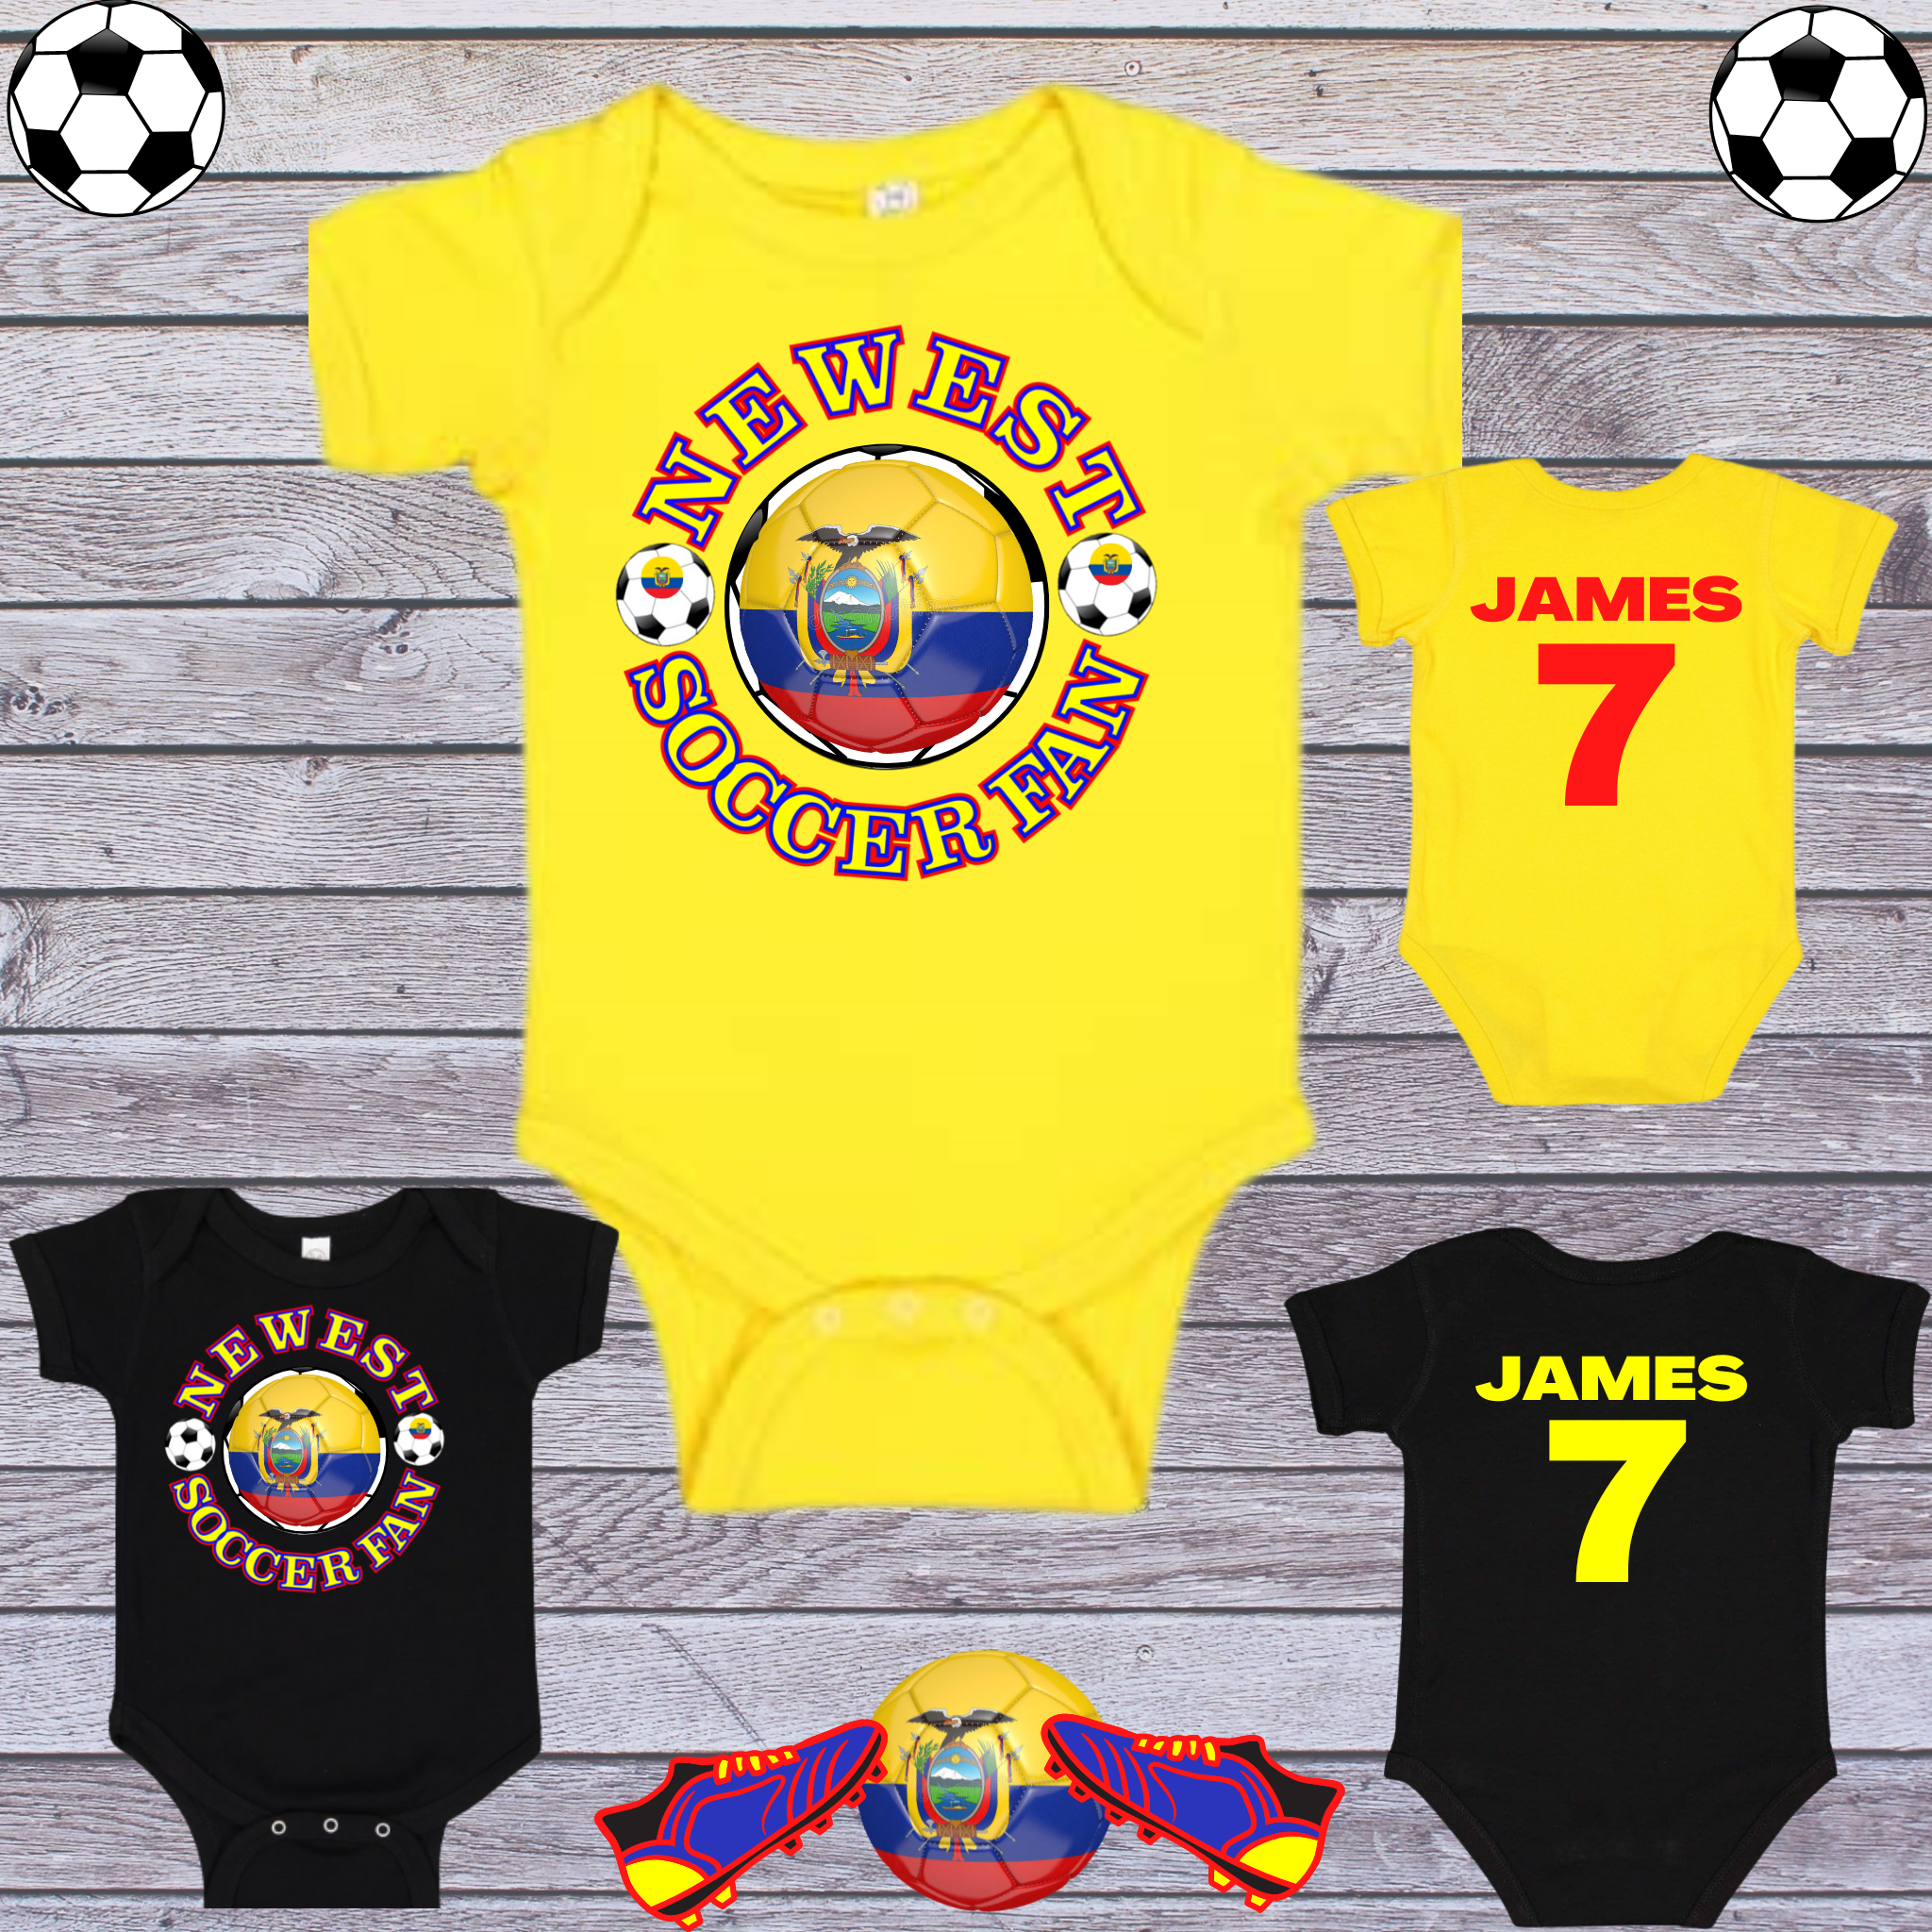 Ecuador soccer legends' souvenirs